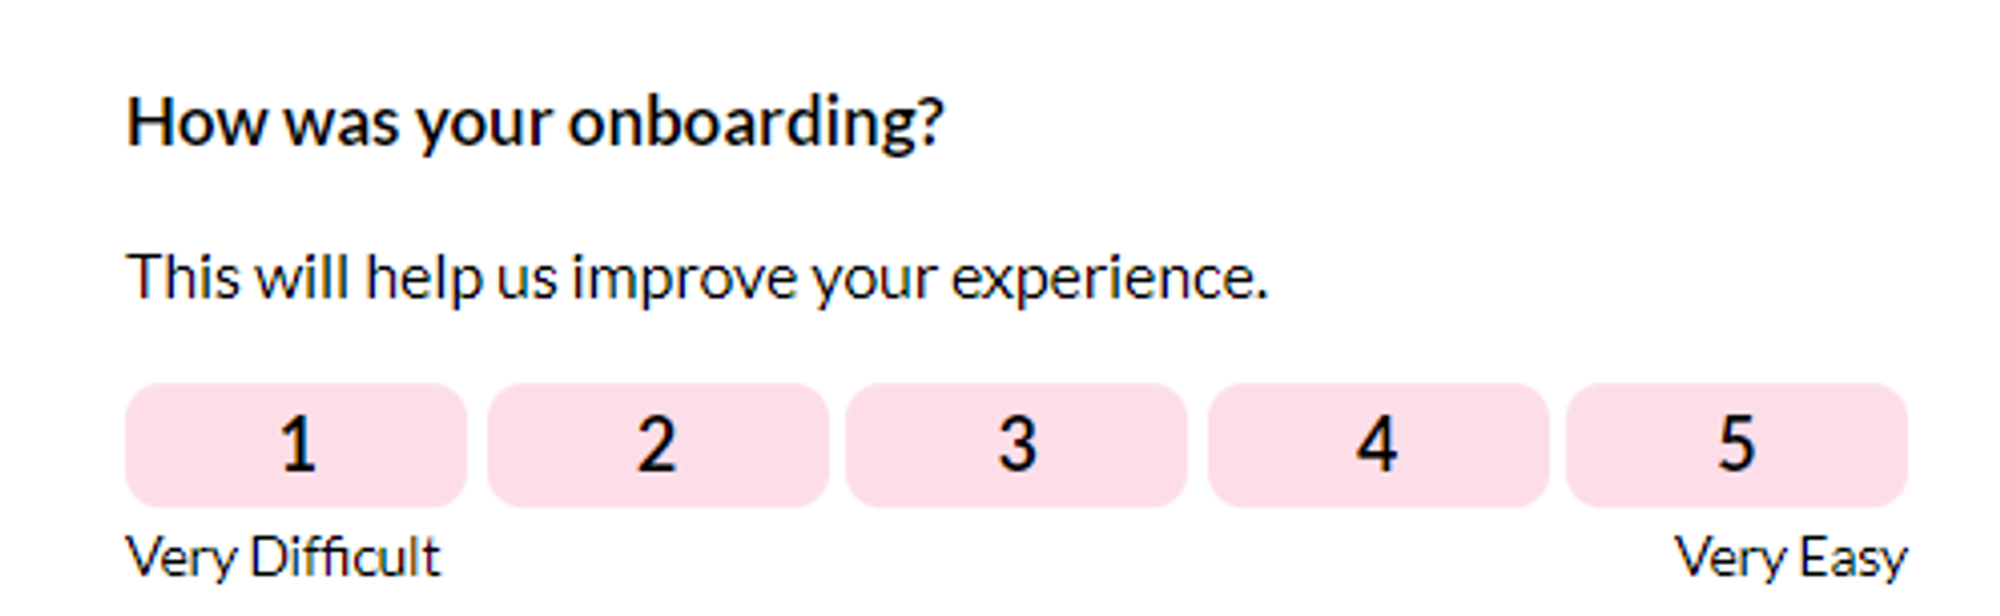 Onboarding survey created in Userpiltot